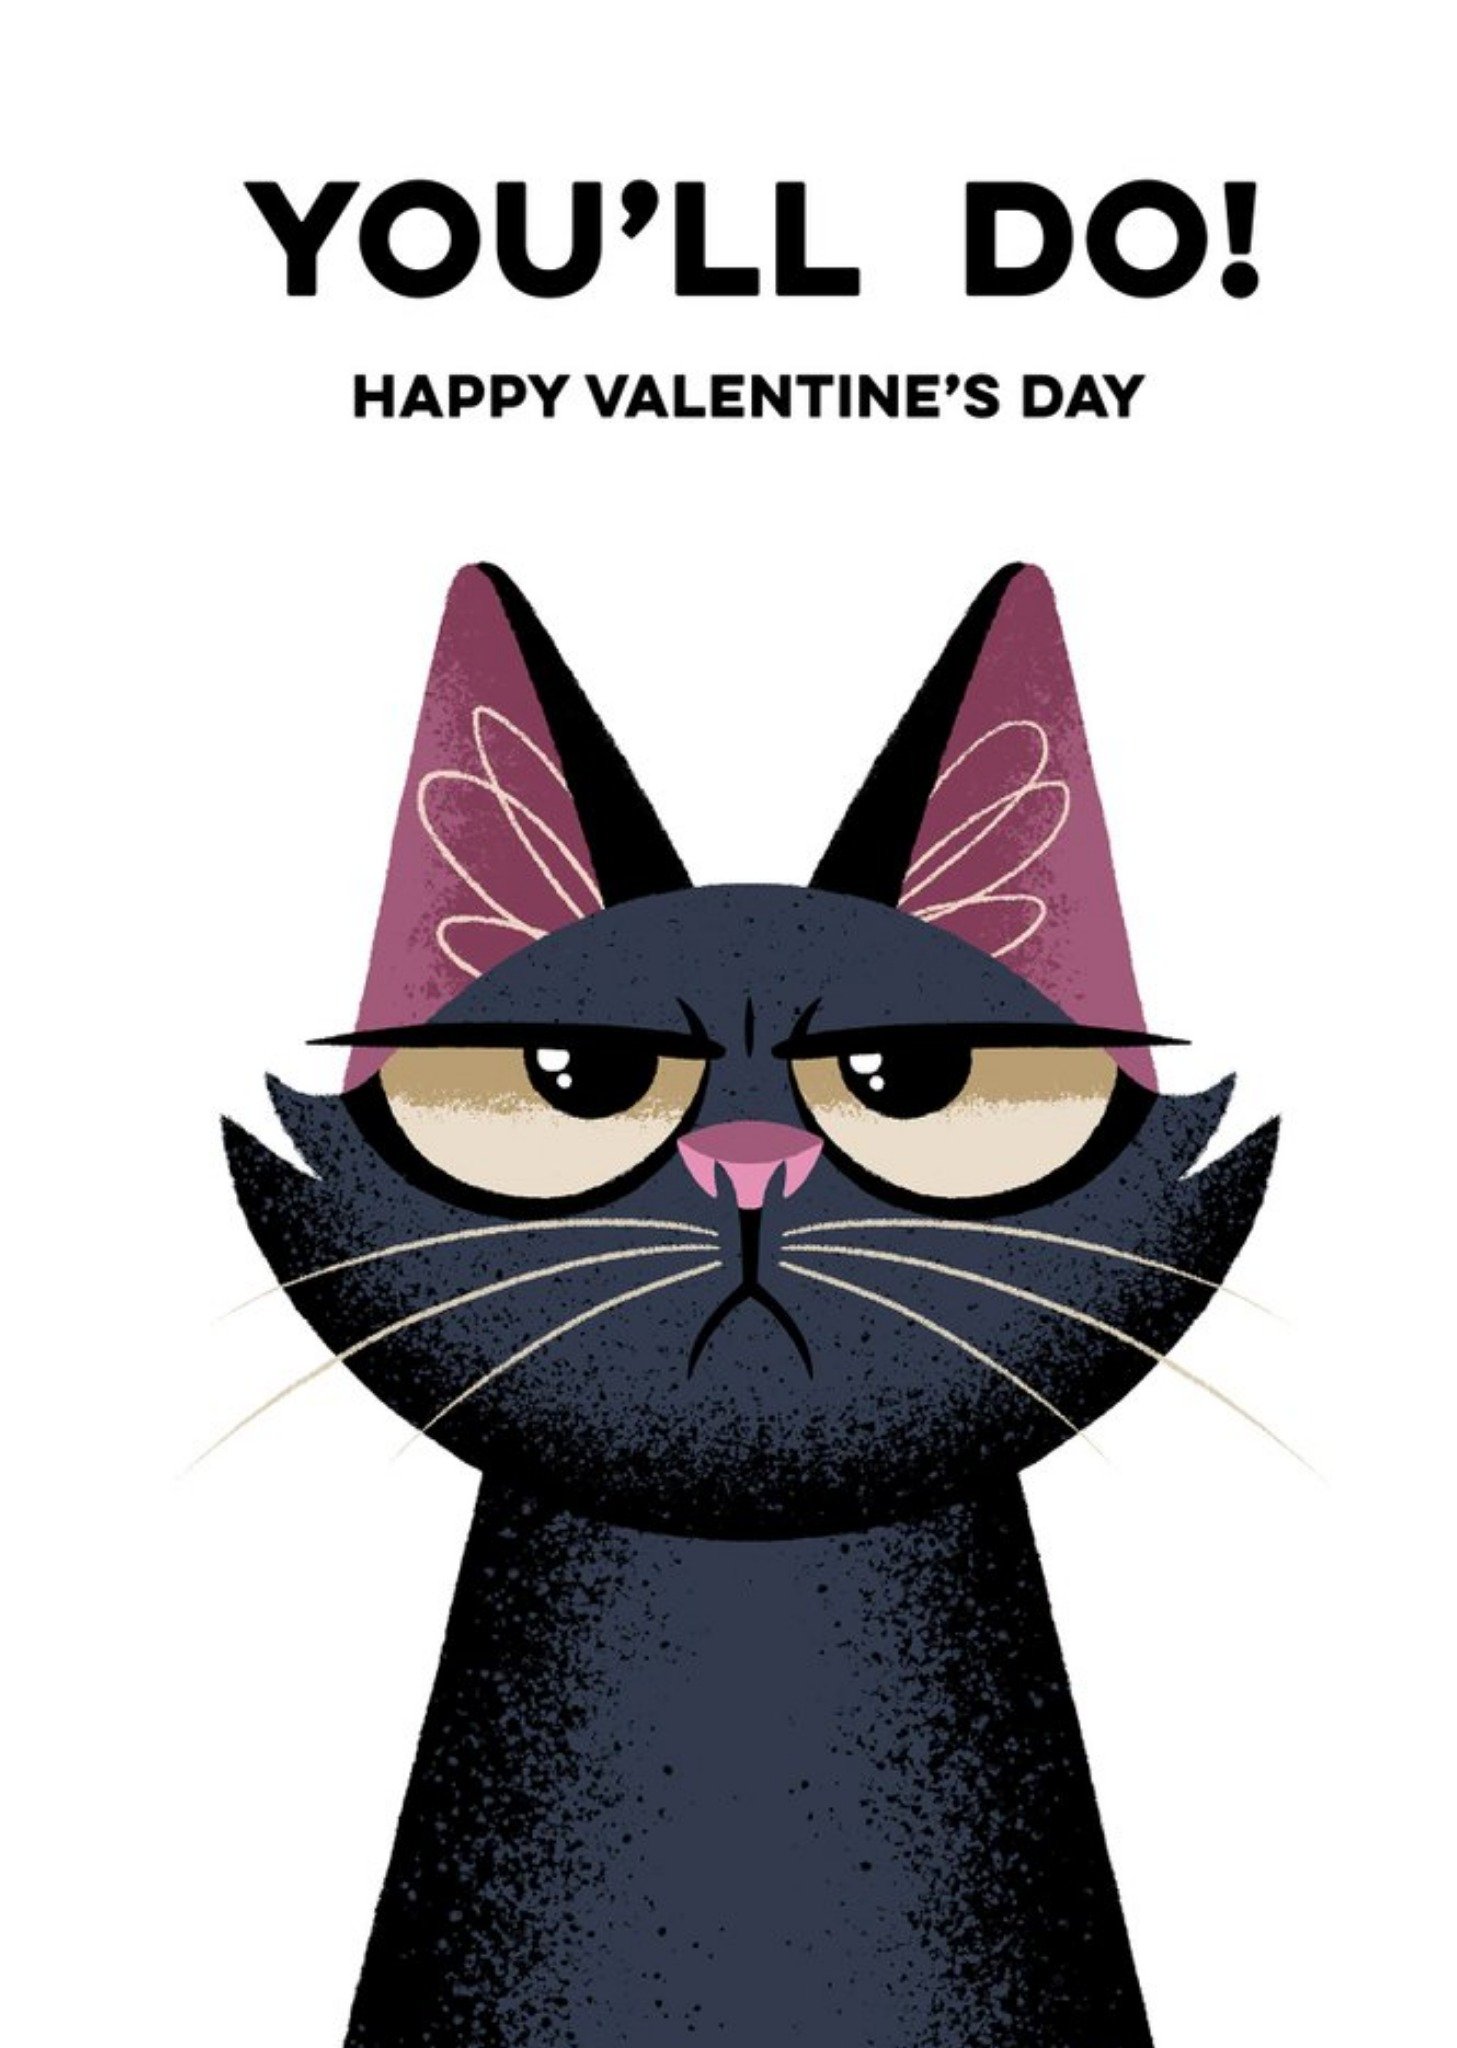 Moonpig Humorous Illustrated Grumpy Black Cat Valentine's Day Card Ecard